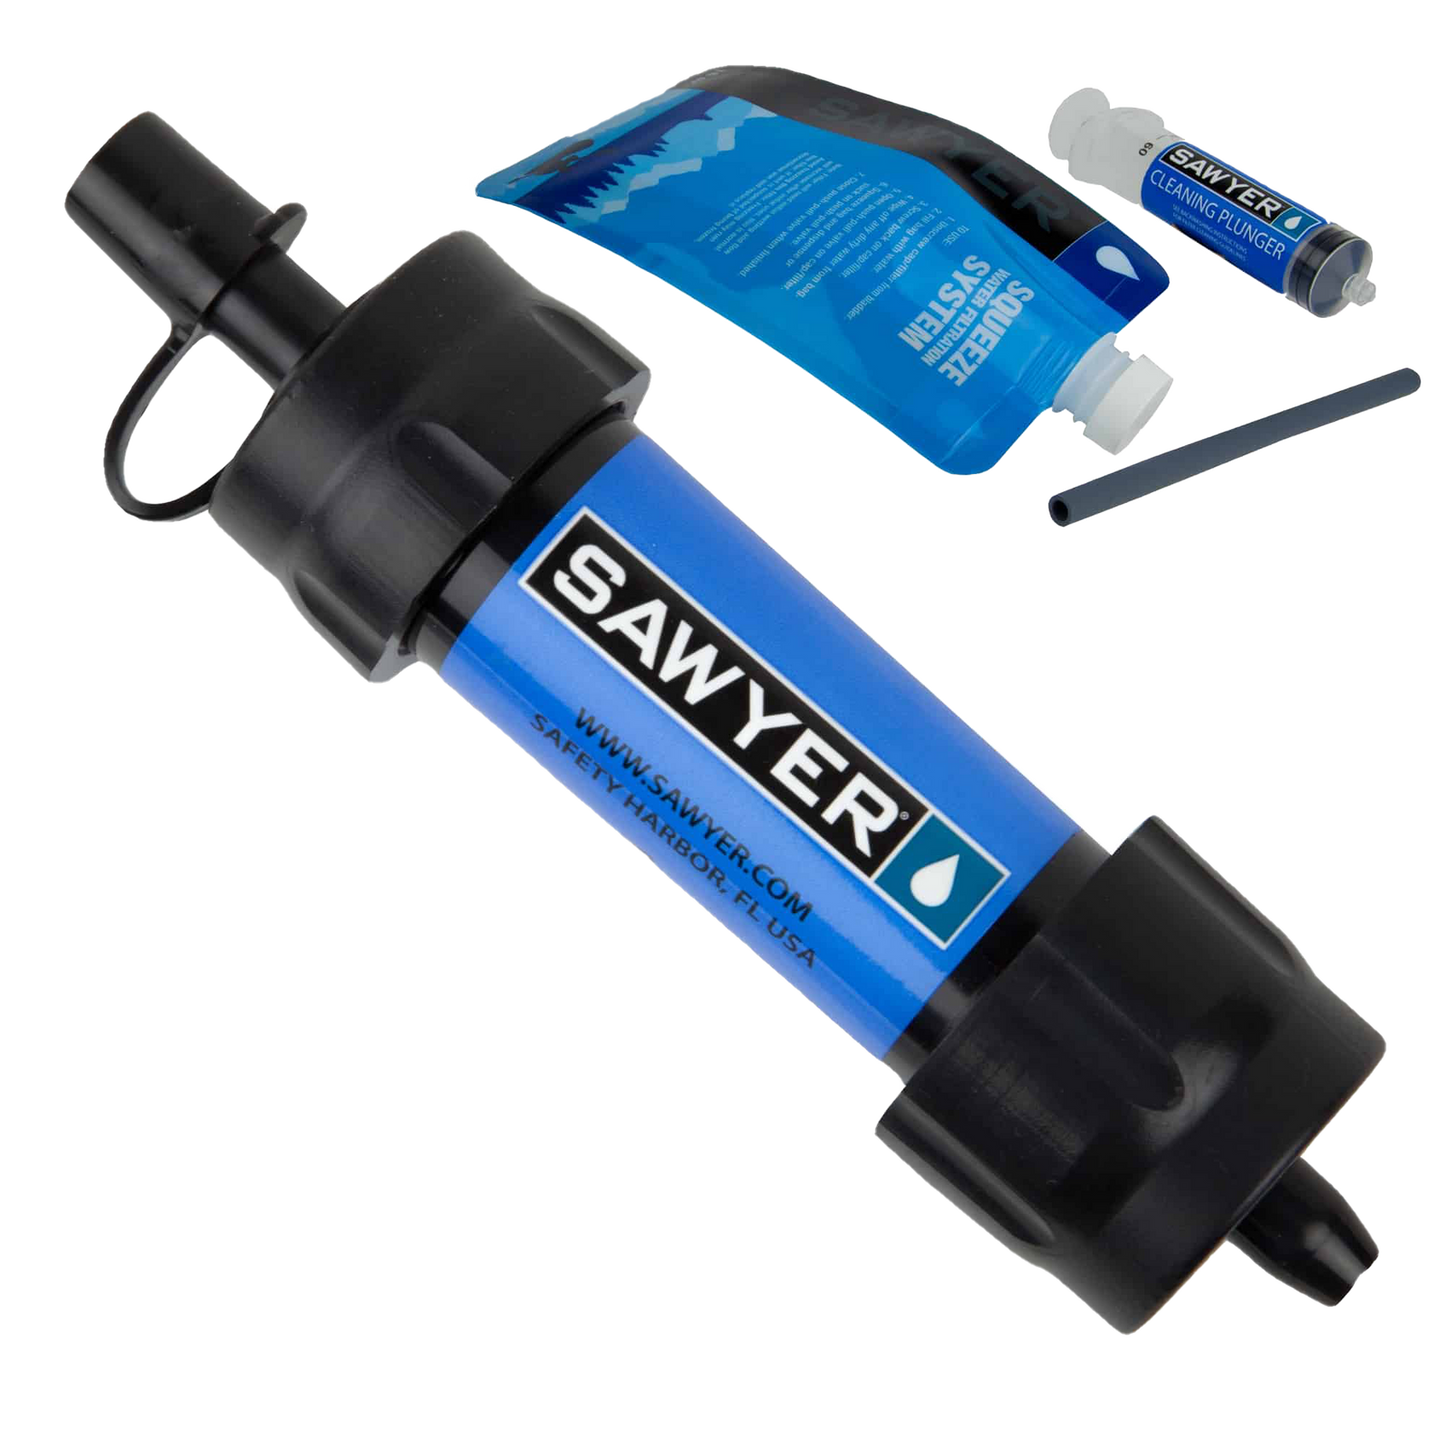 Sawyer Mini Water Filtration System